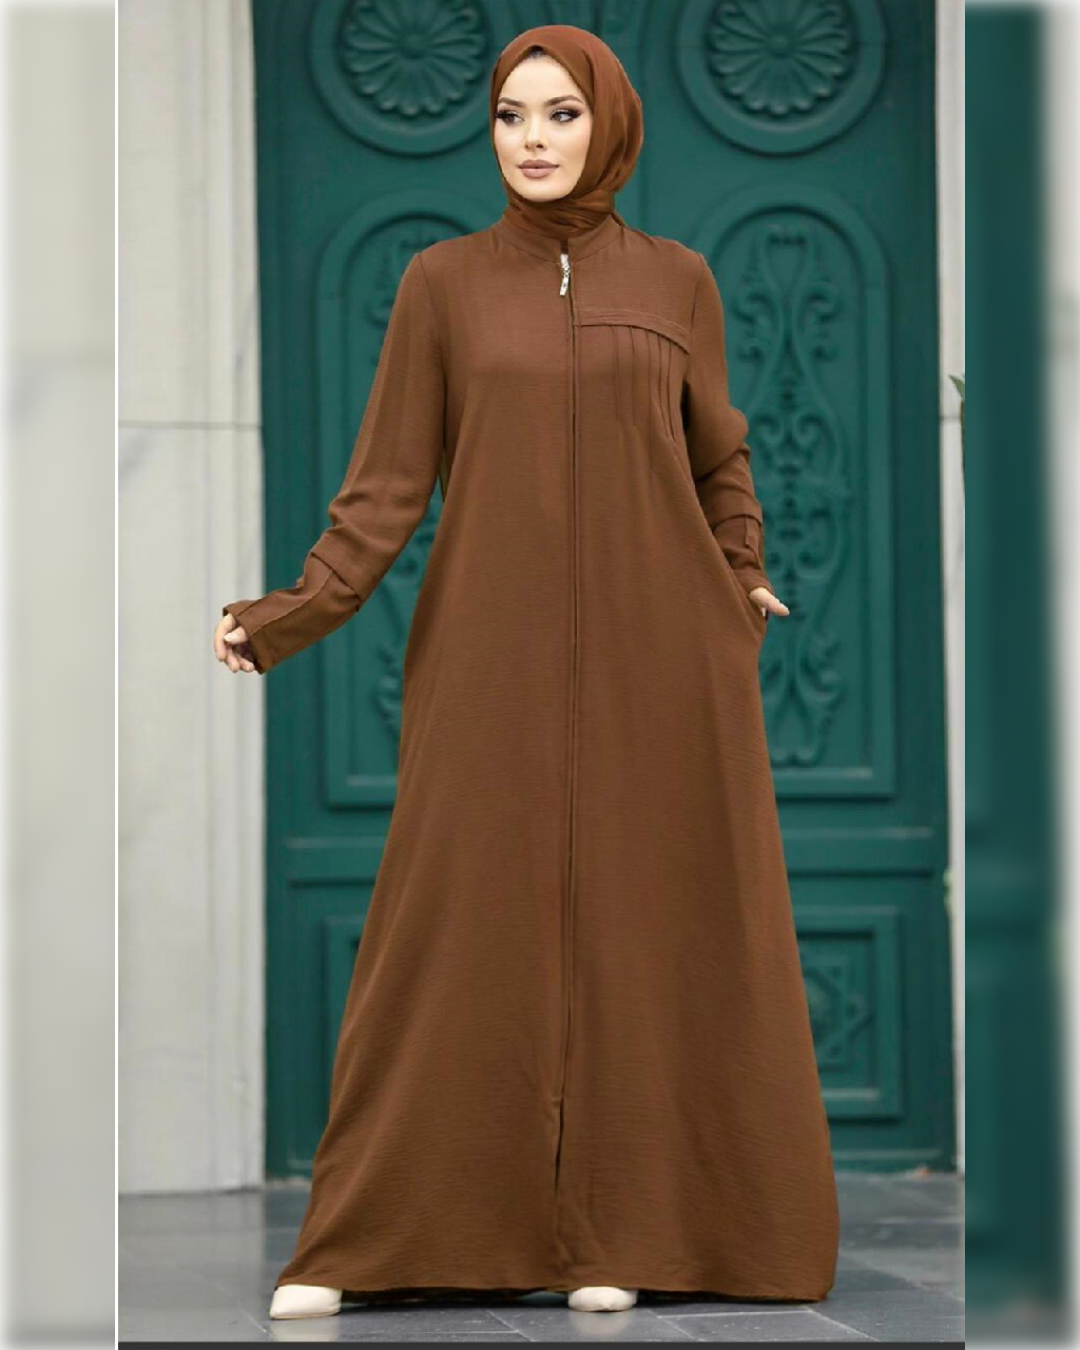 Casual -  Aerobin Abaya Dress in Light Brown Shade عباءة أنيقة من قماش الايروبين باللون البني الفاتح الجميل